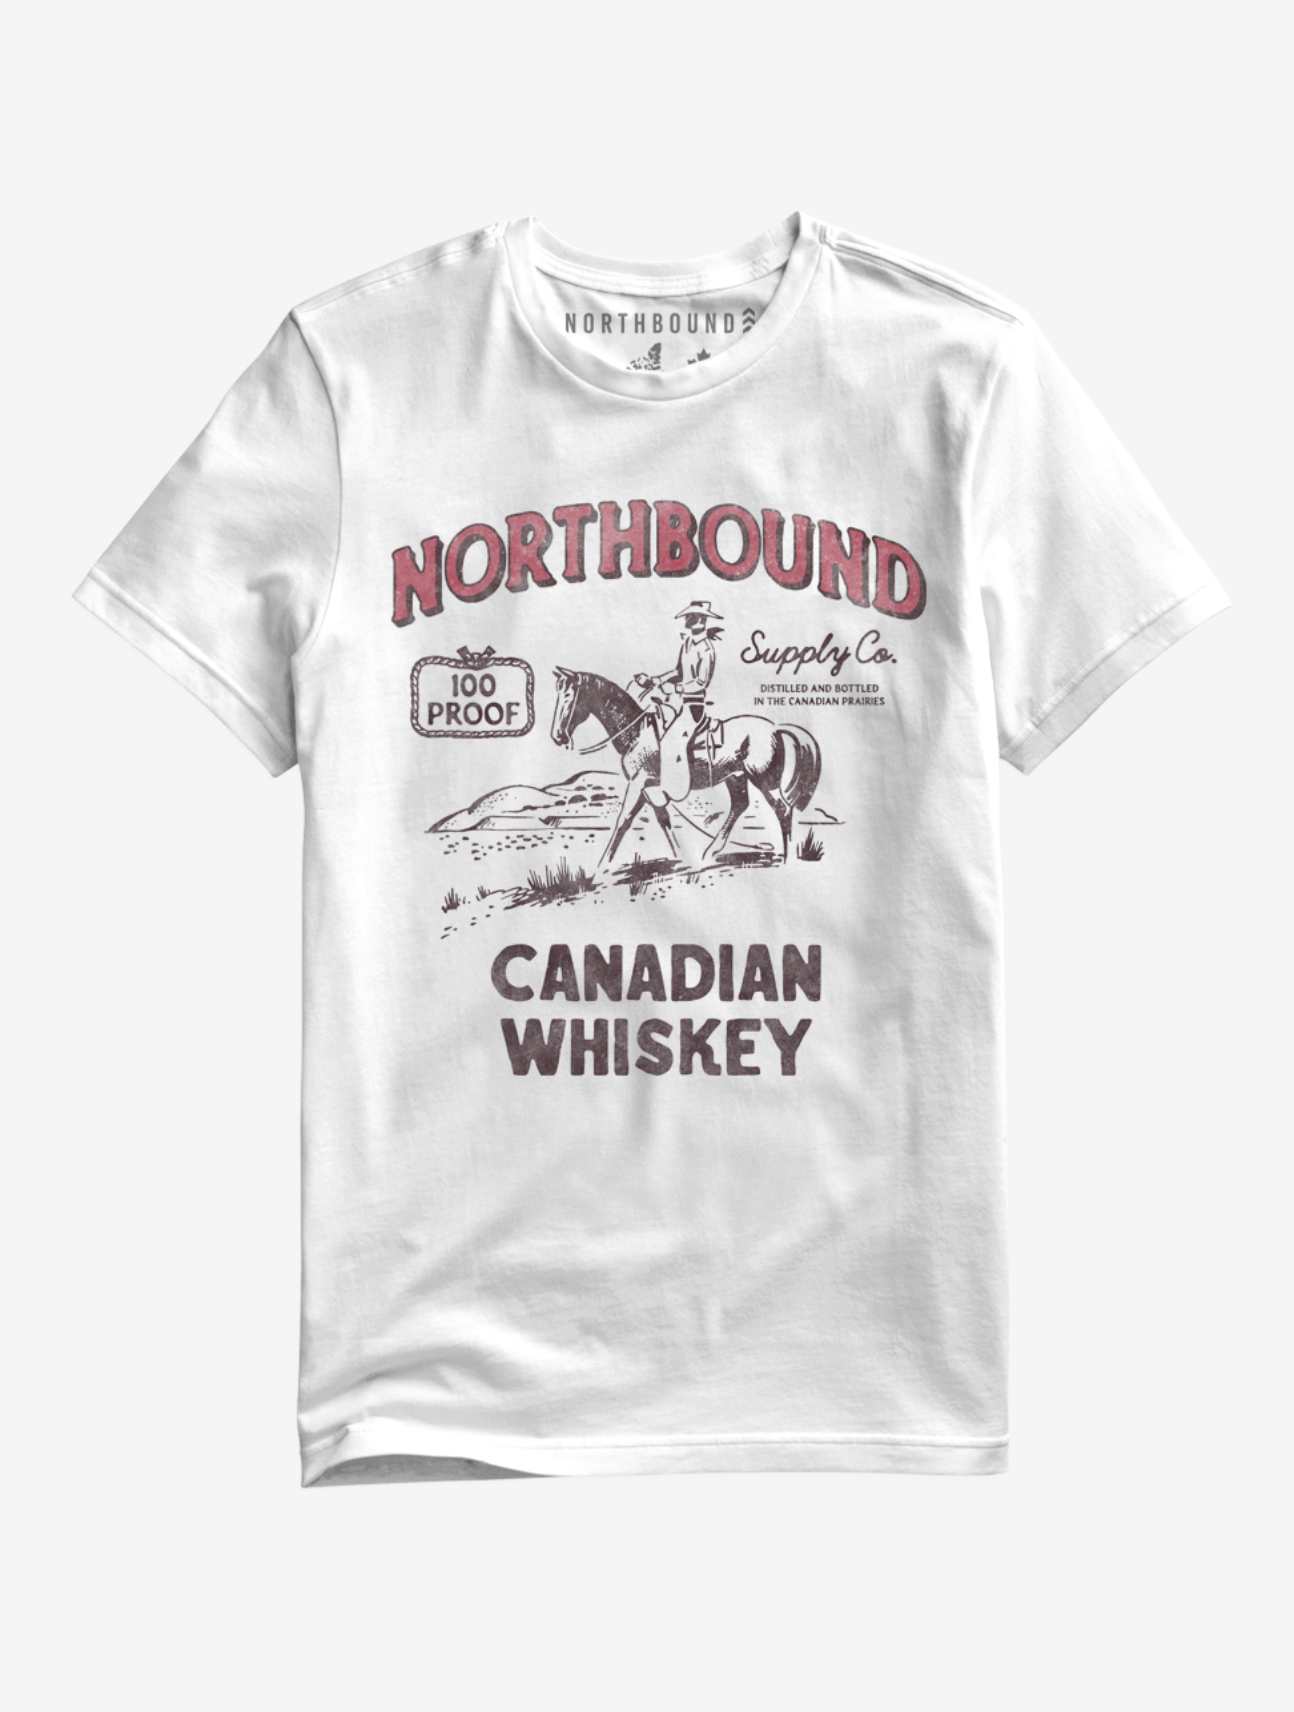 Canadian Whiskey T-Shirt